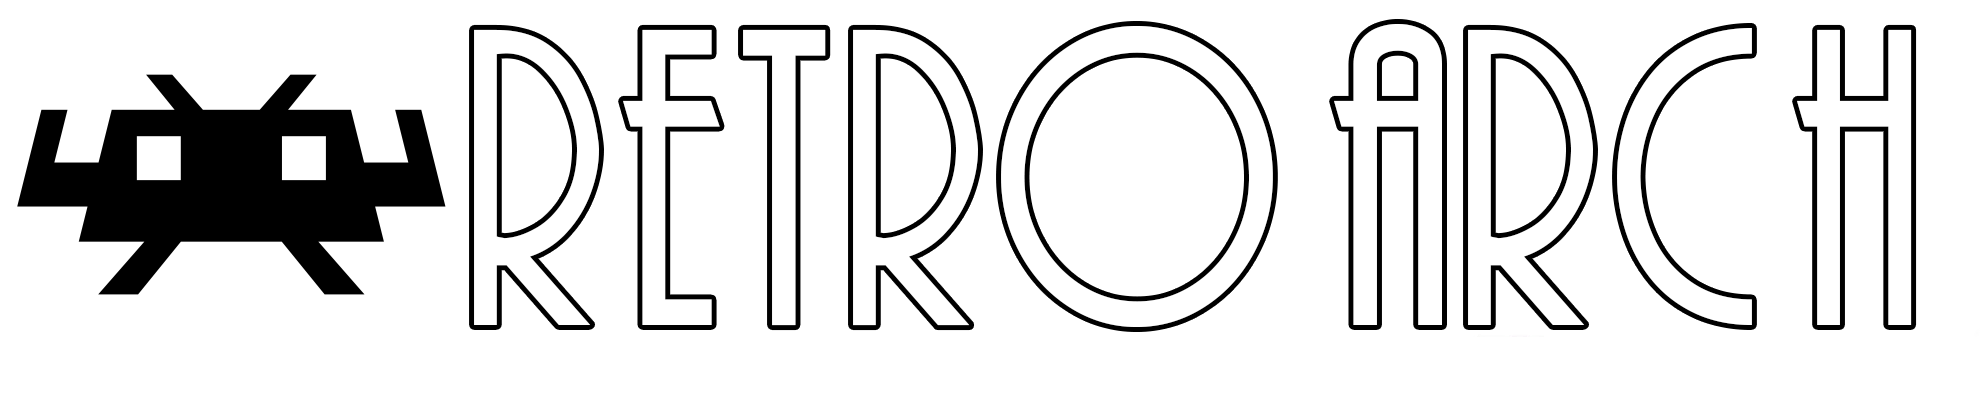 retroarch-logo.png